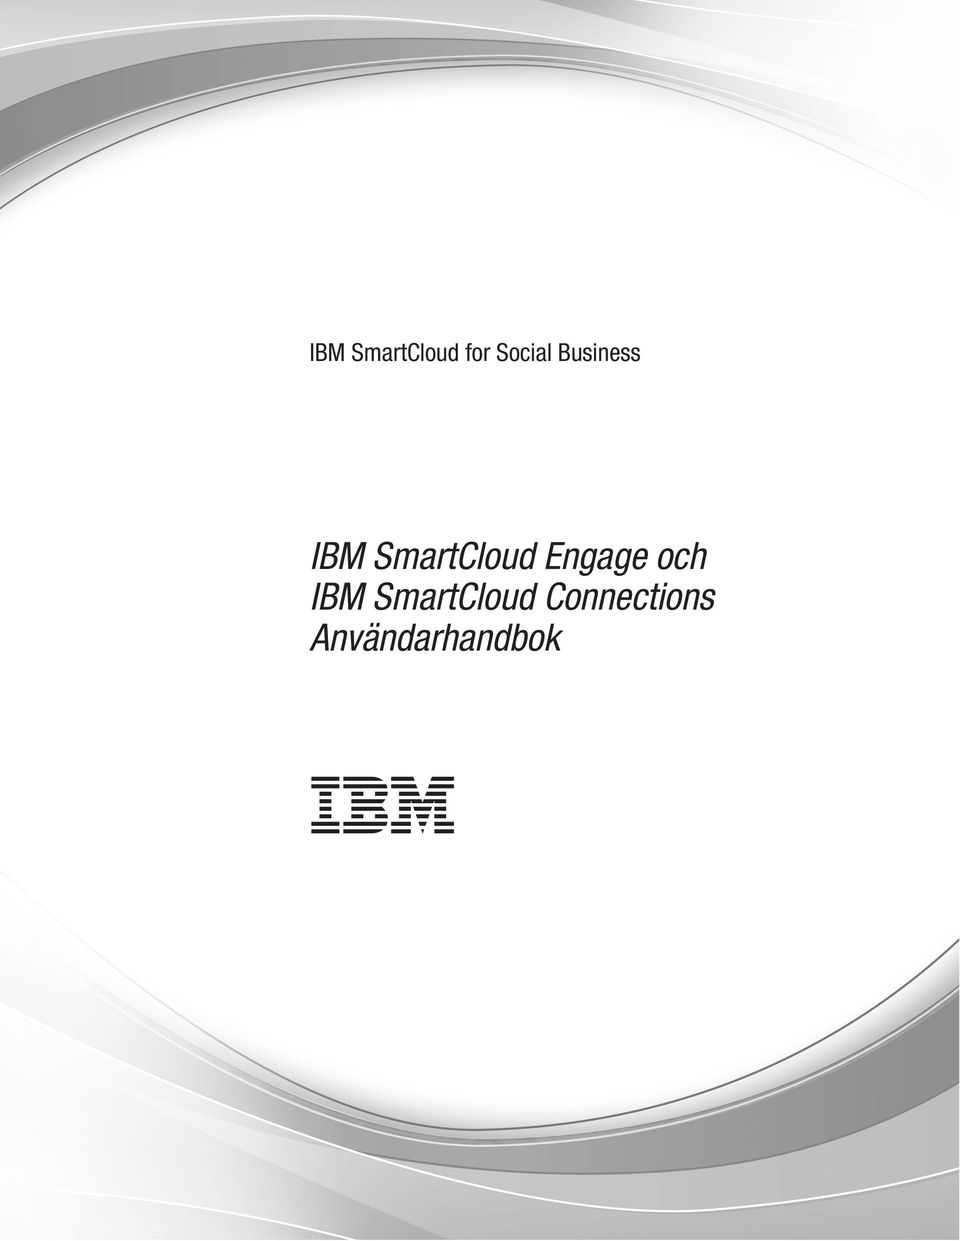 Engage och IBM SmartCloud